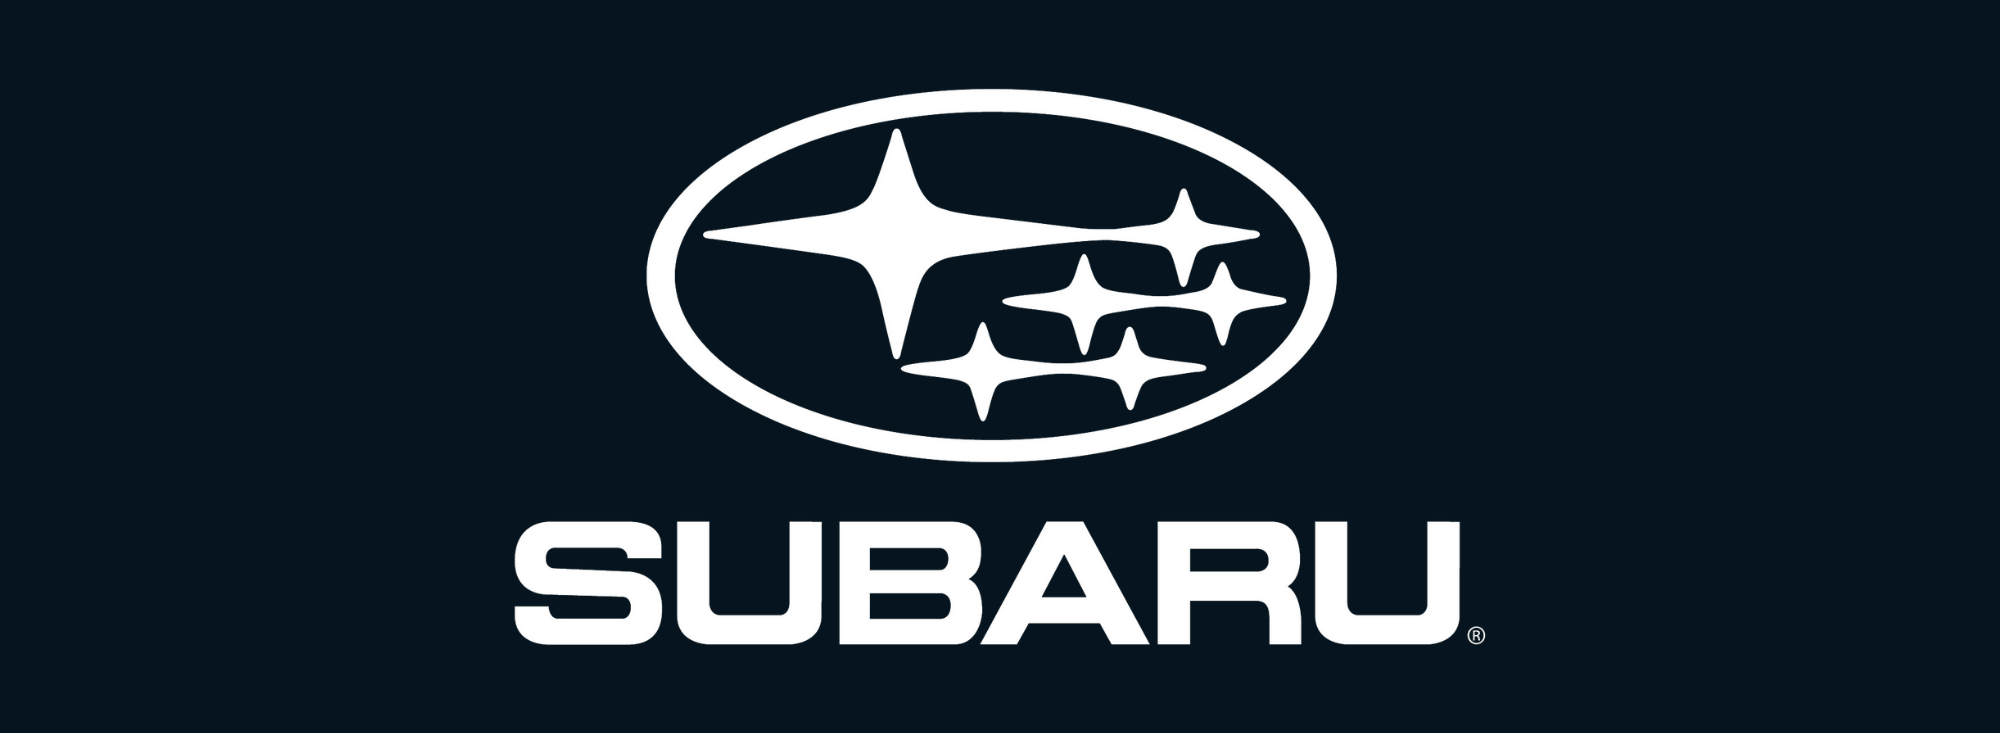 Subaru Logo - OEM Partner Program